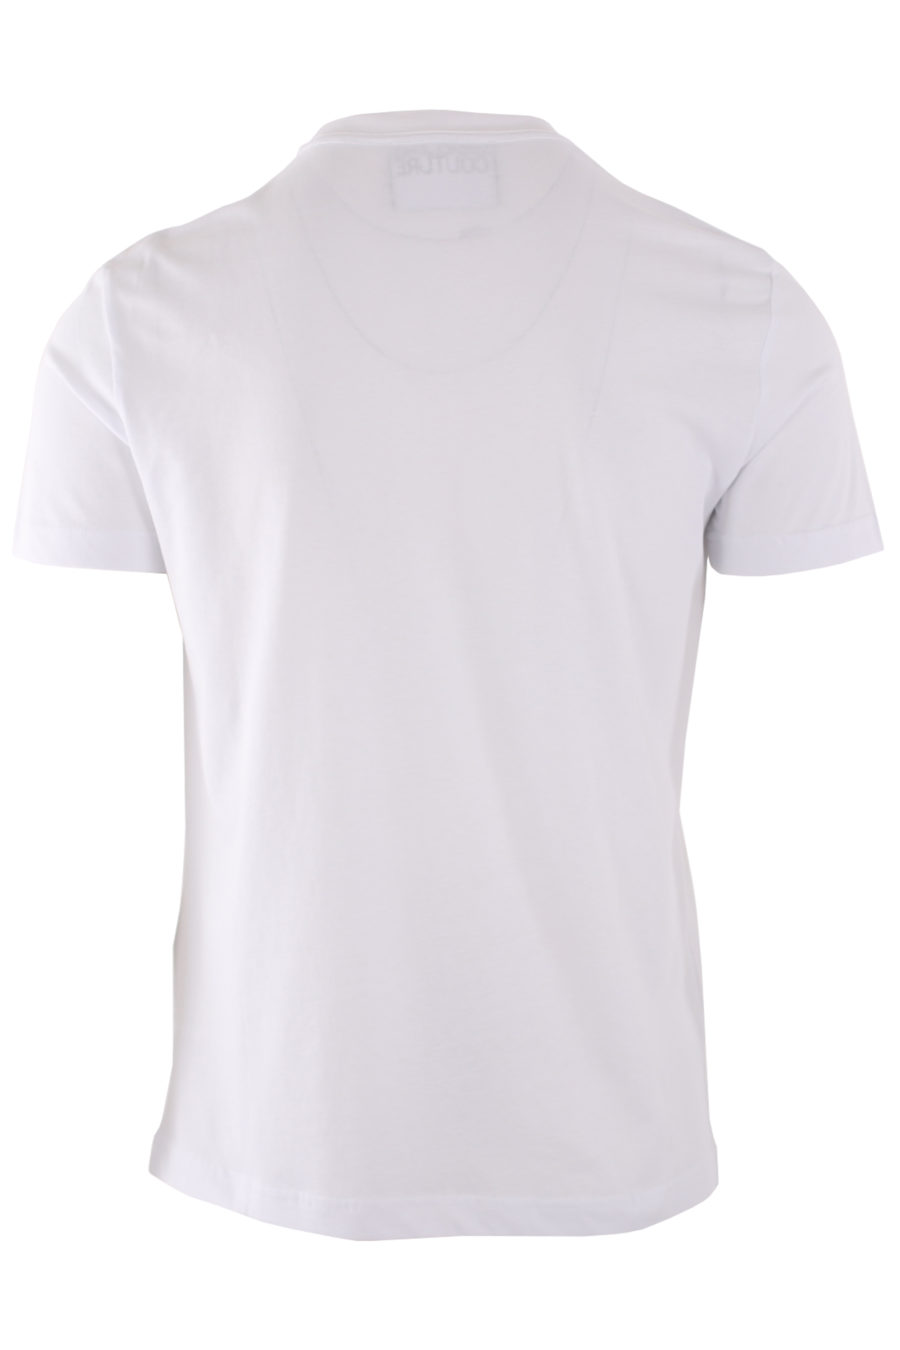 Camiseta de manga corta blanca con logo dorado - IMG 8697